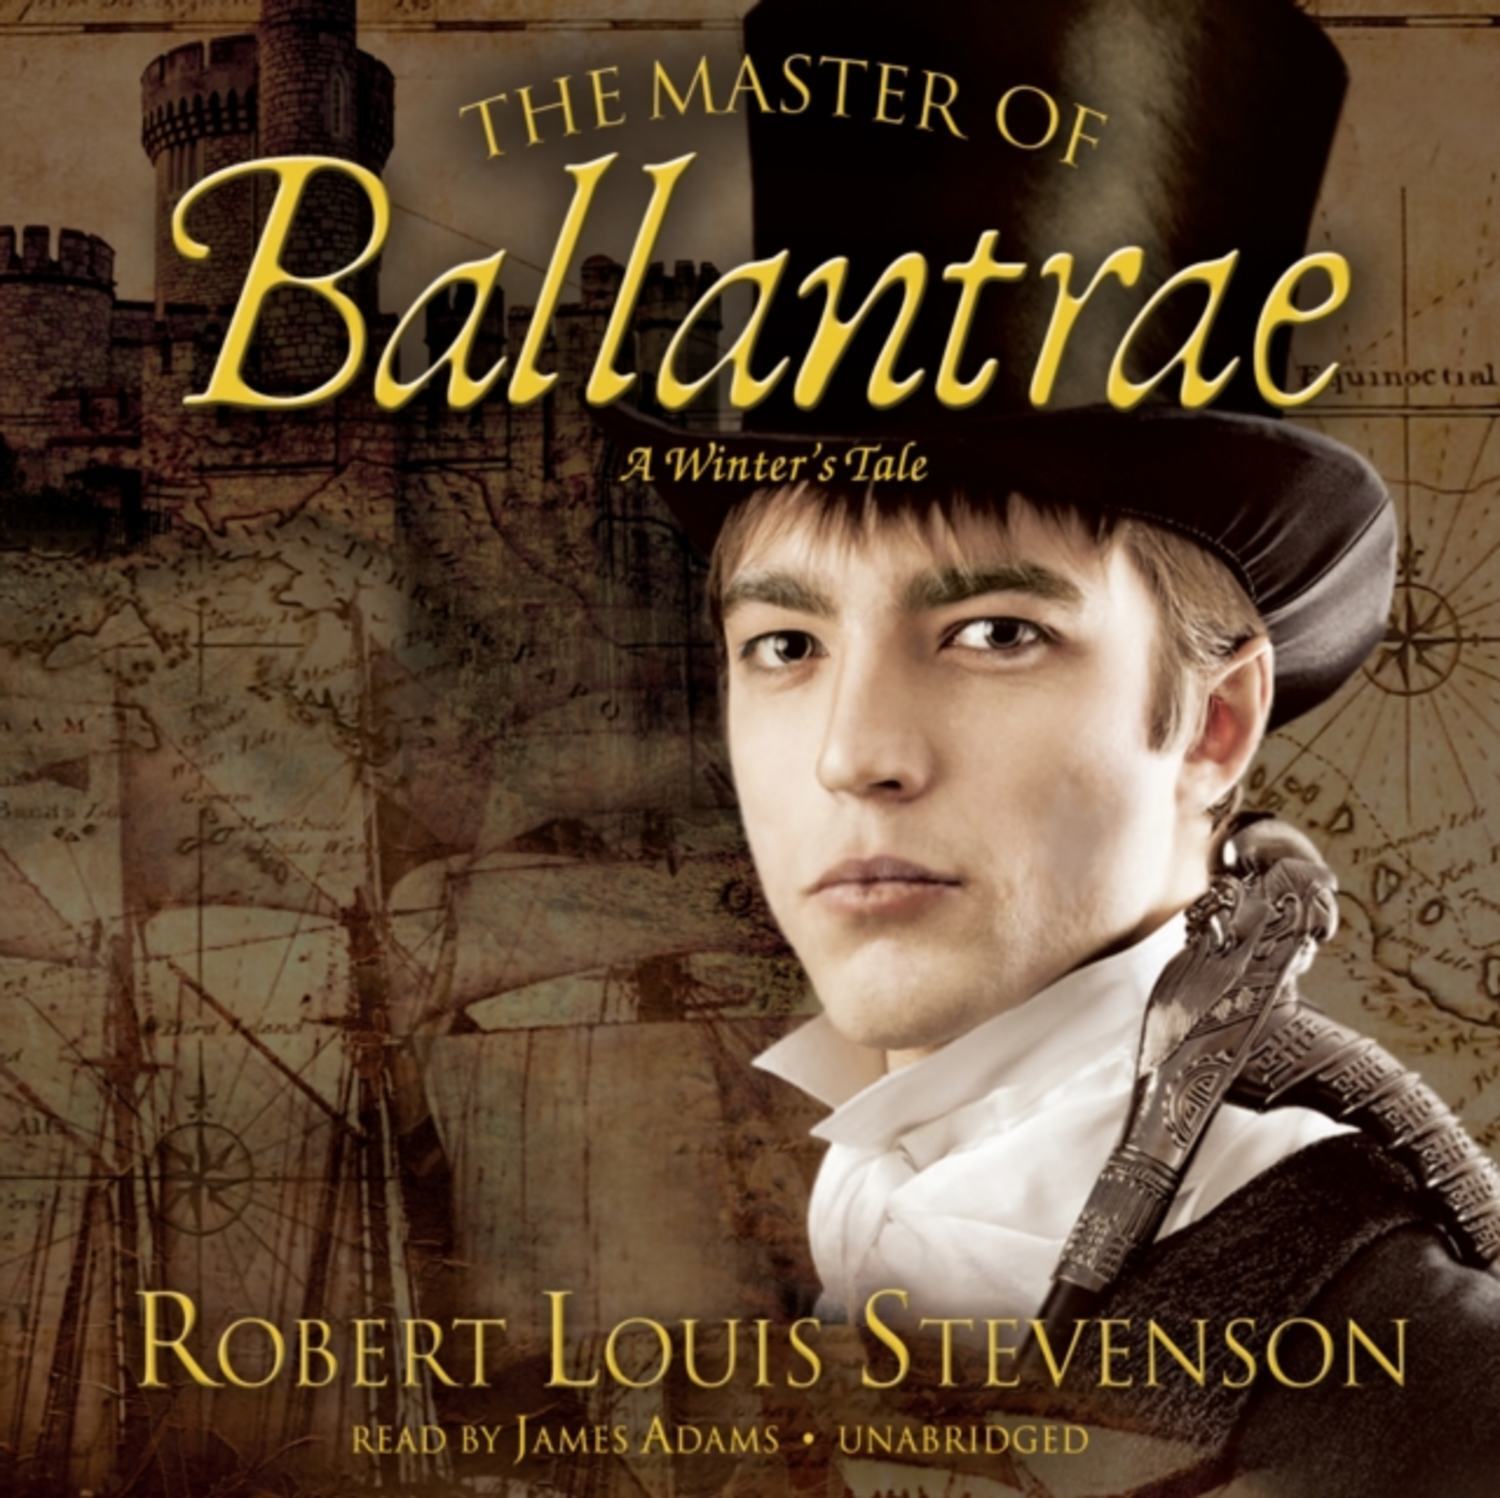 Аудиокниги мастер игры. The Master of Ballantrae Robert Louis Stevenson. The Master of Ballantrae book. Картинки к книге Стивенсон the Master of Ballantrae: a Winter’s Tale.